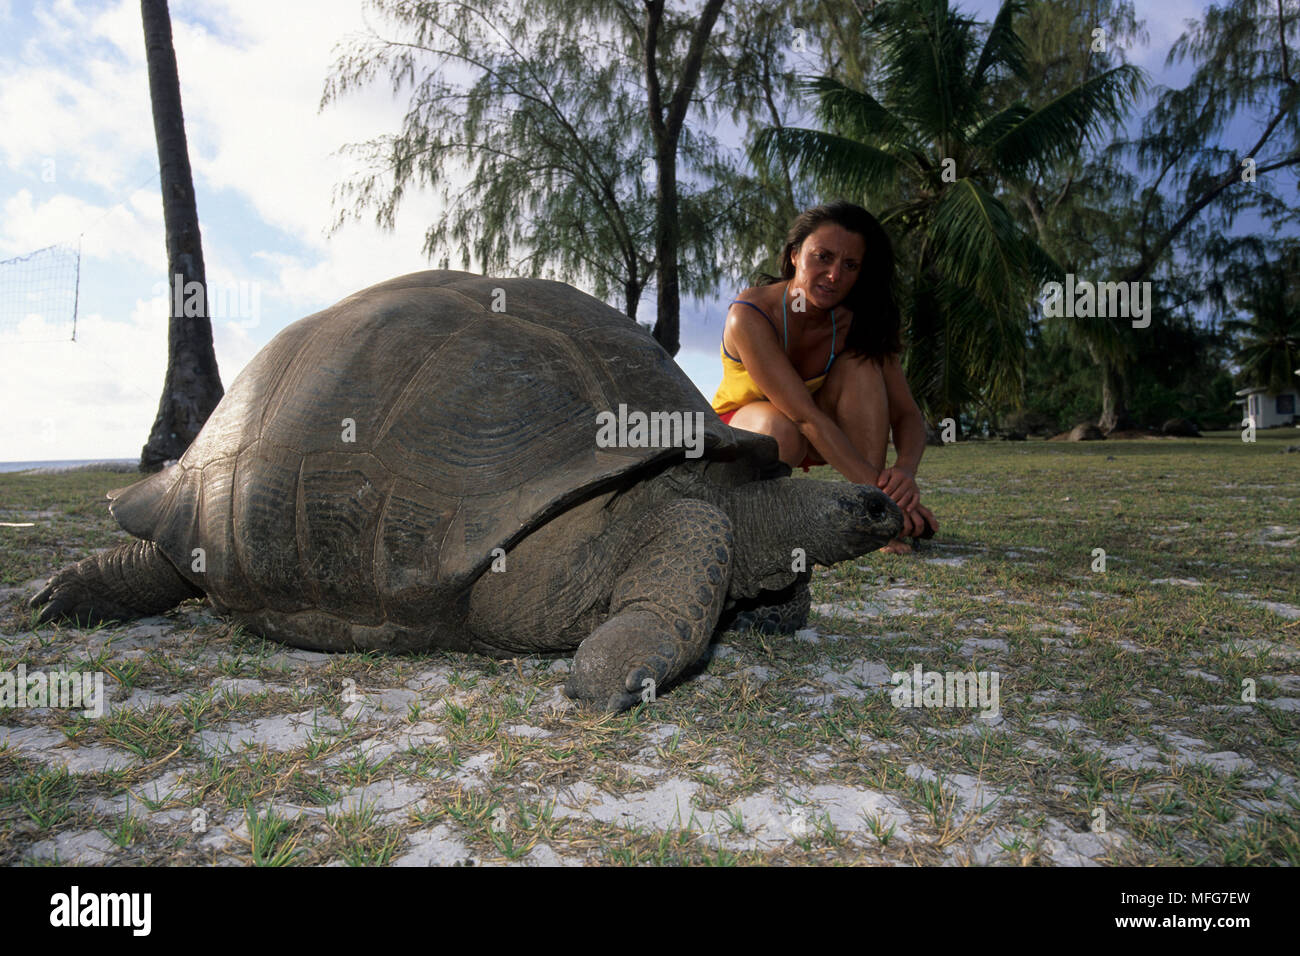 Lookink femmina una tartaruga gigante, Geochelone gigantea, Aldabra Atoll, patrimonio mondiale naturale, Seychelles, Oceano Indiano Data: 24.06.08 RIF: ZB777 Foto Stock